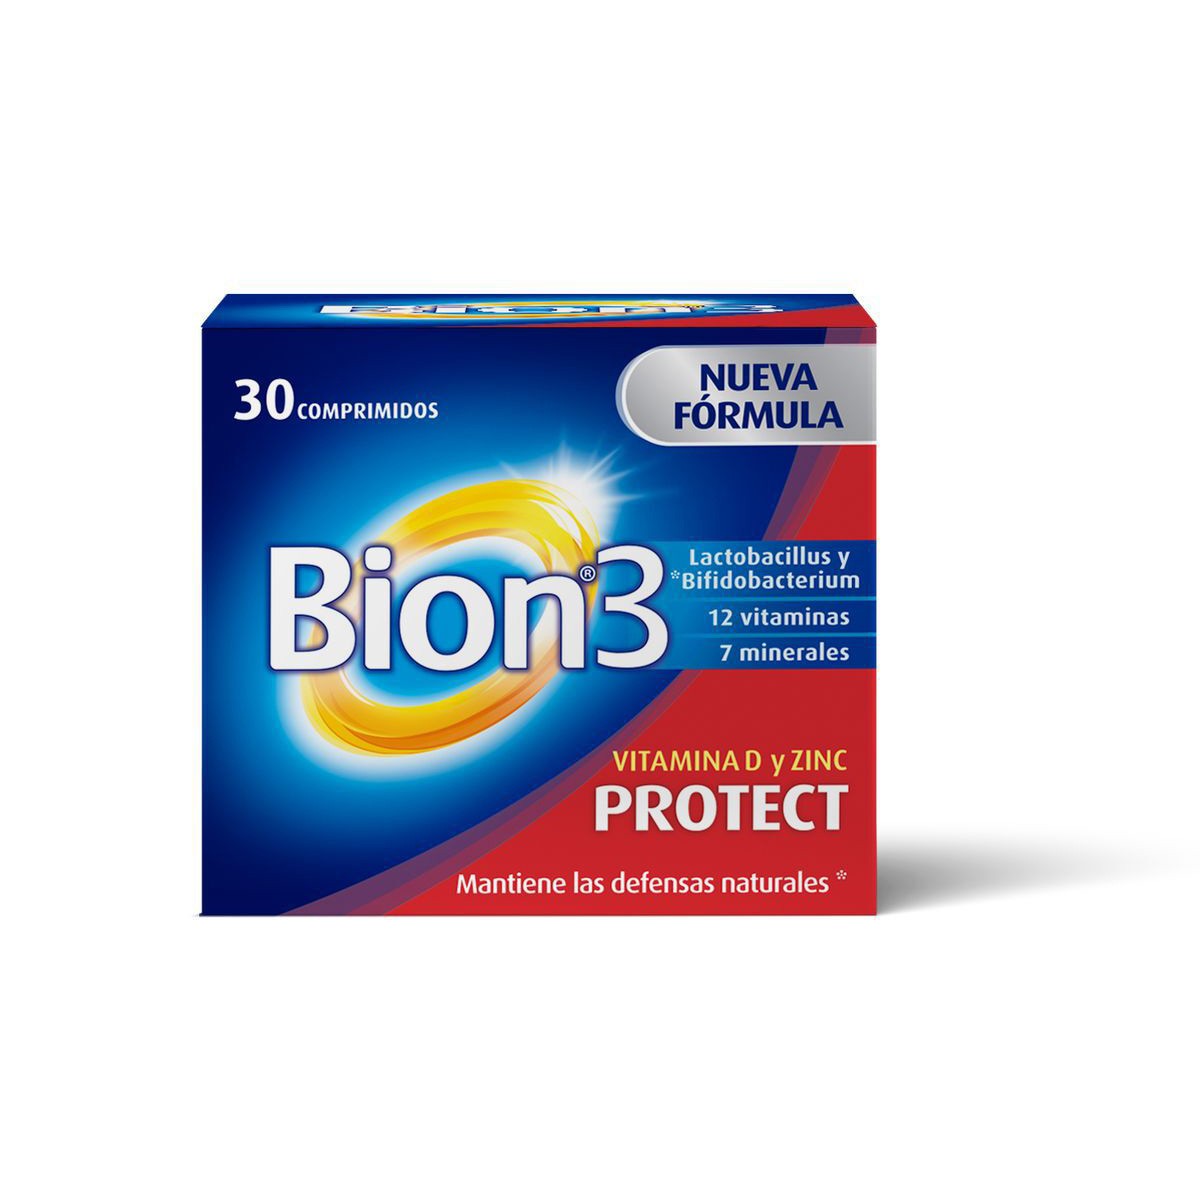 Bion 3 protect 30 comprimidos